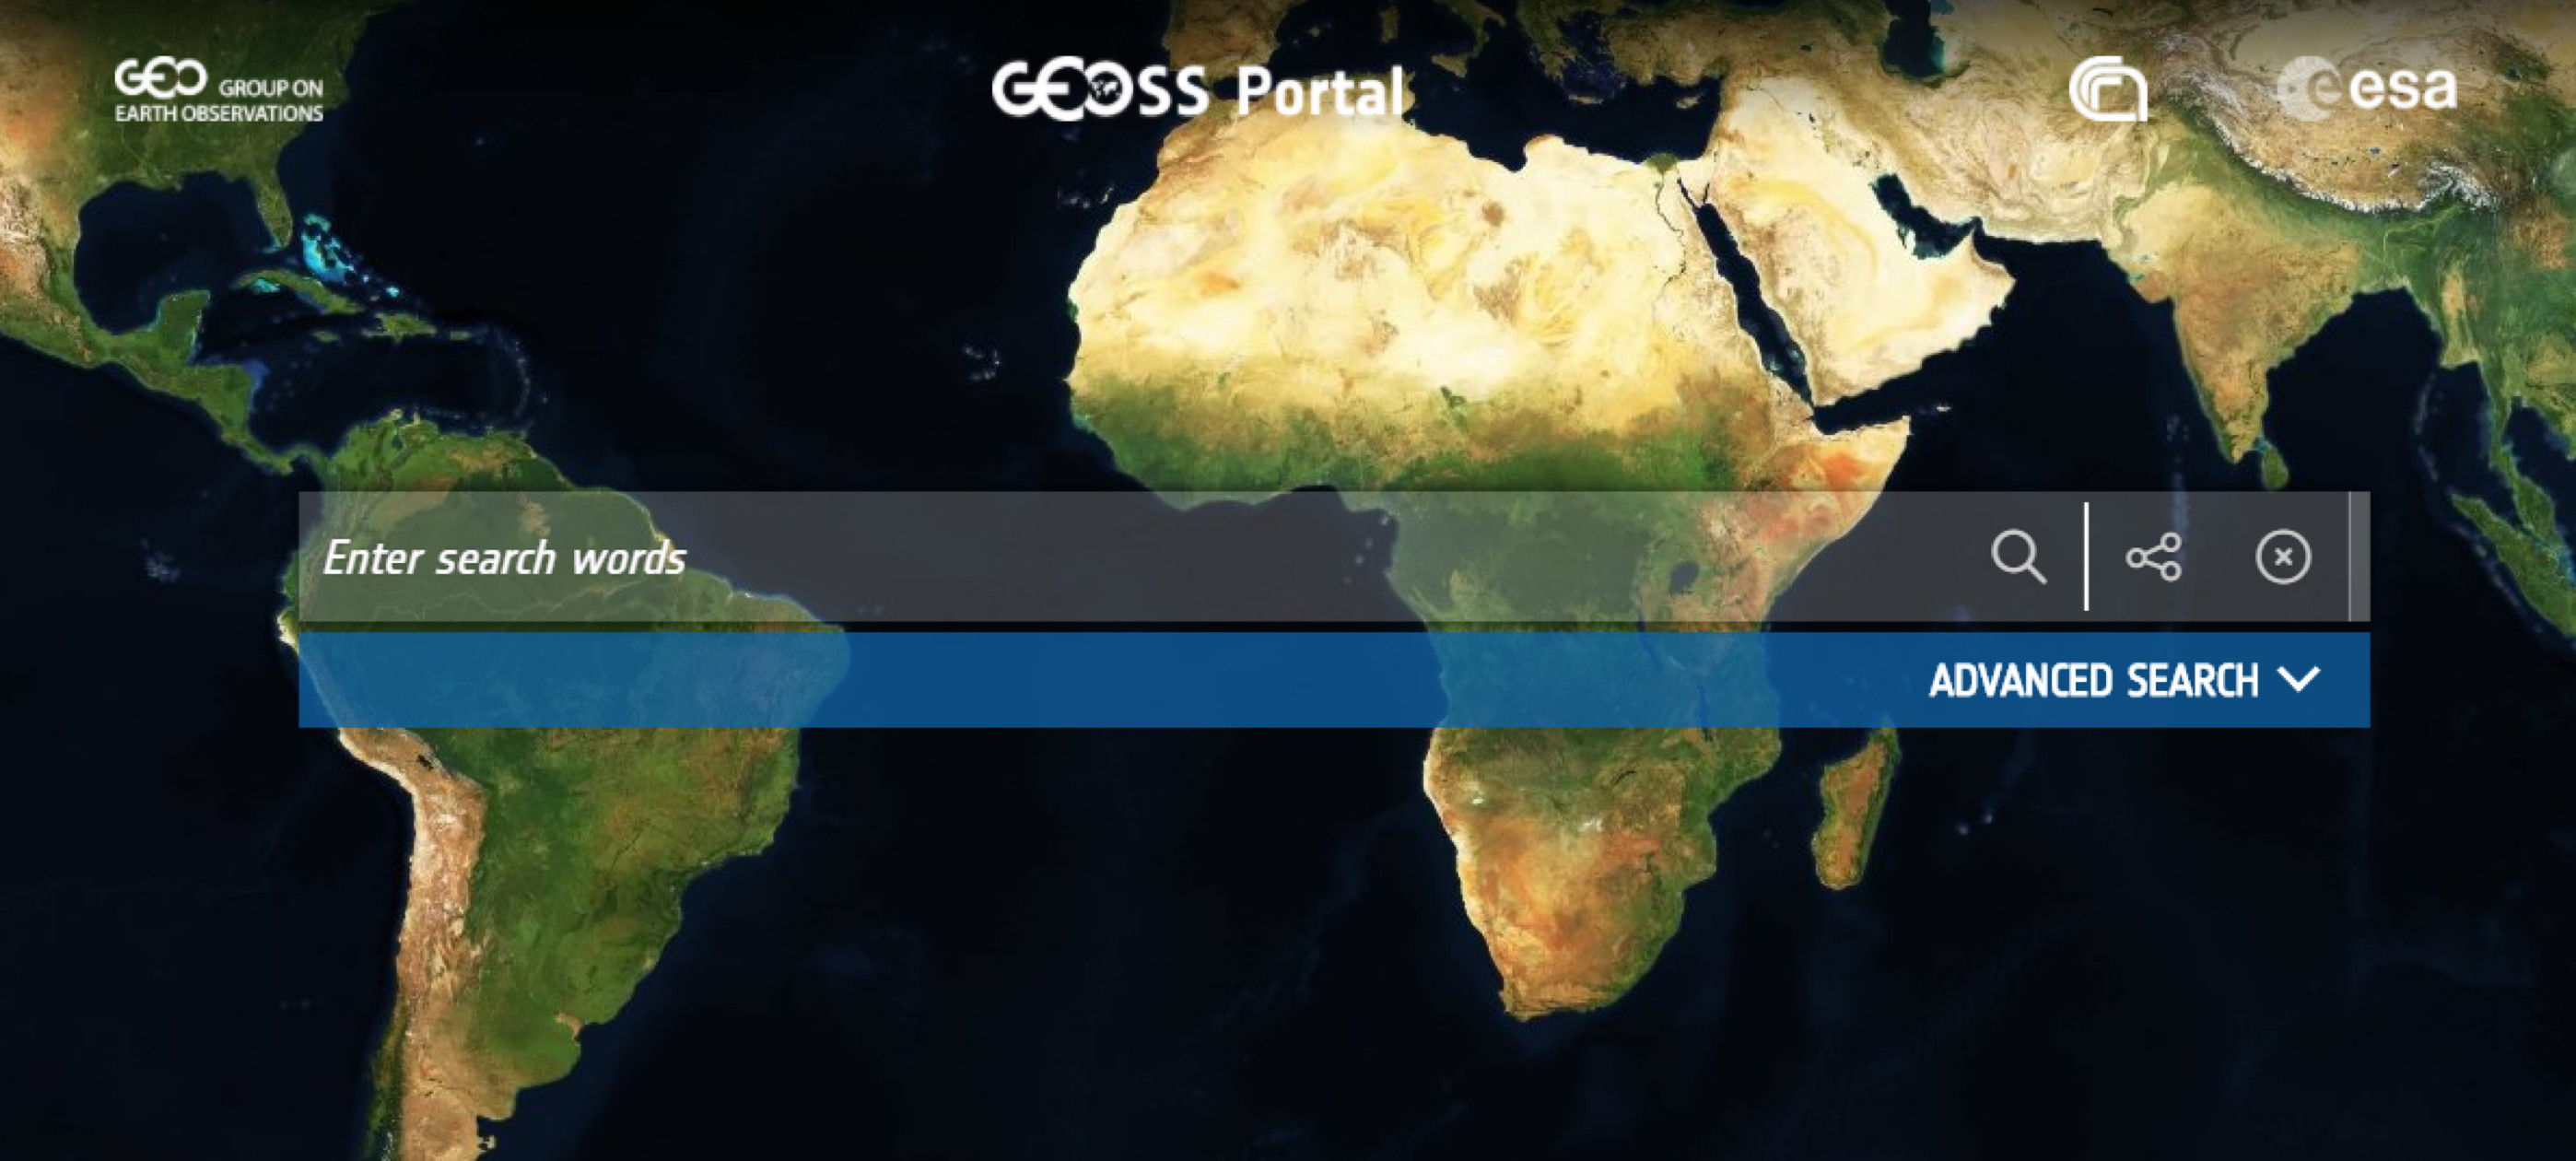 Visit the enhanced GEOSS Portal to access EO data